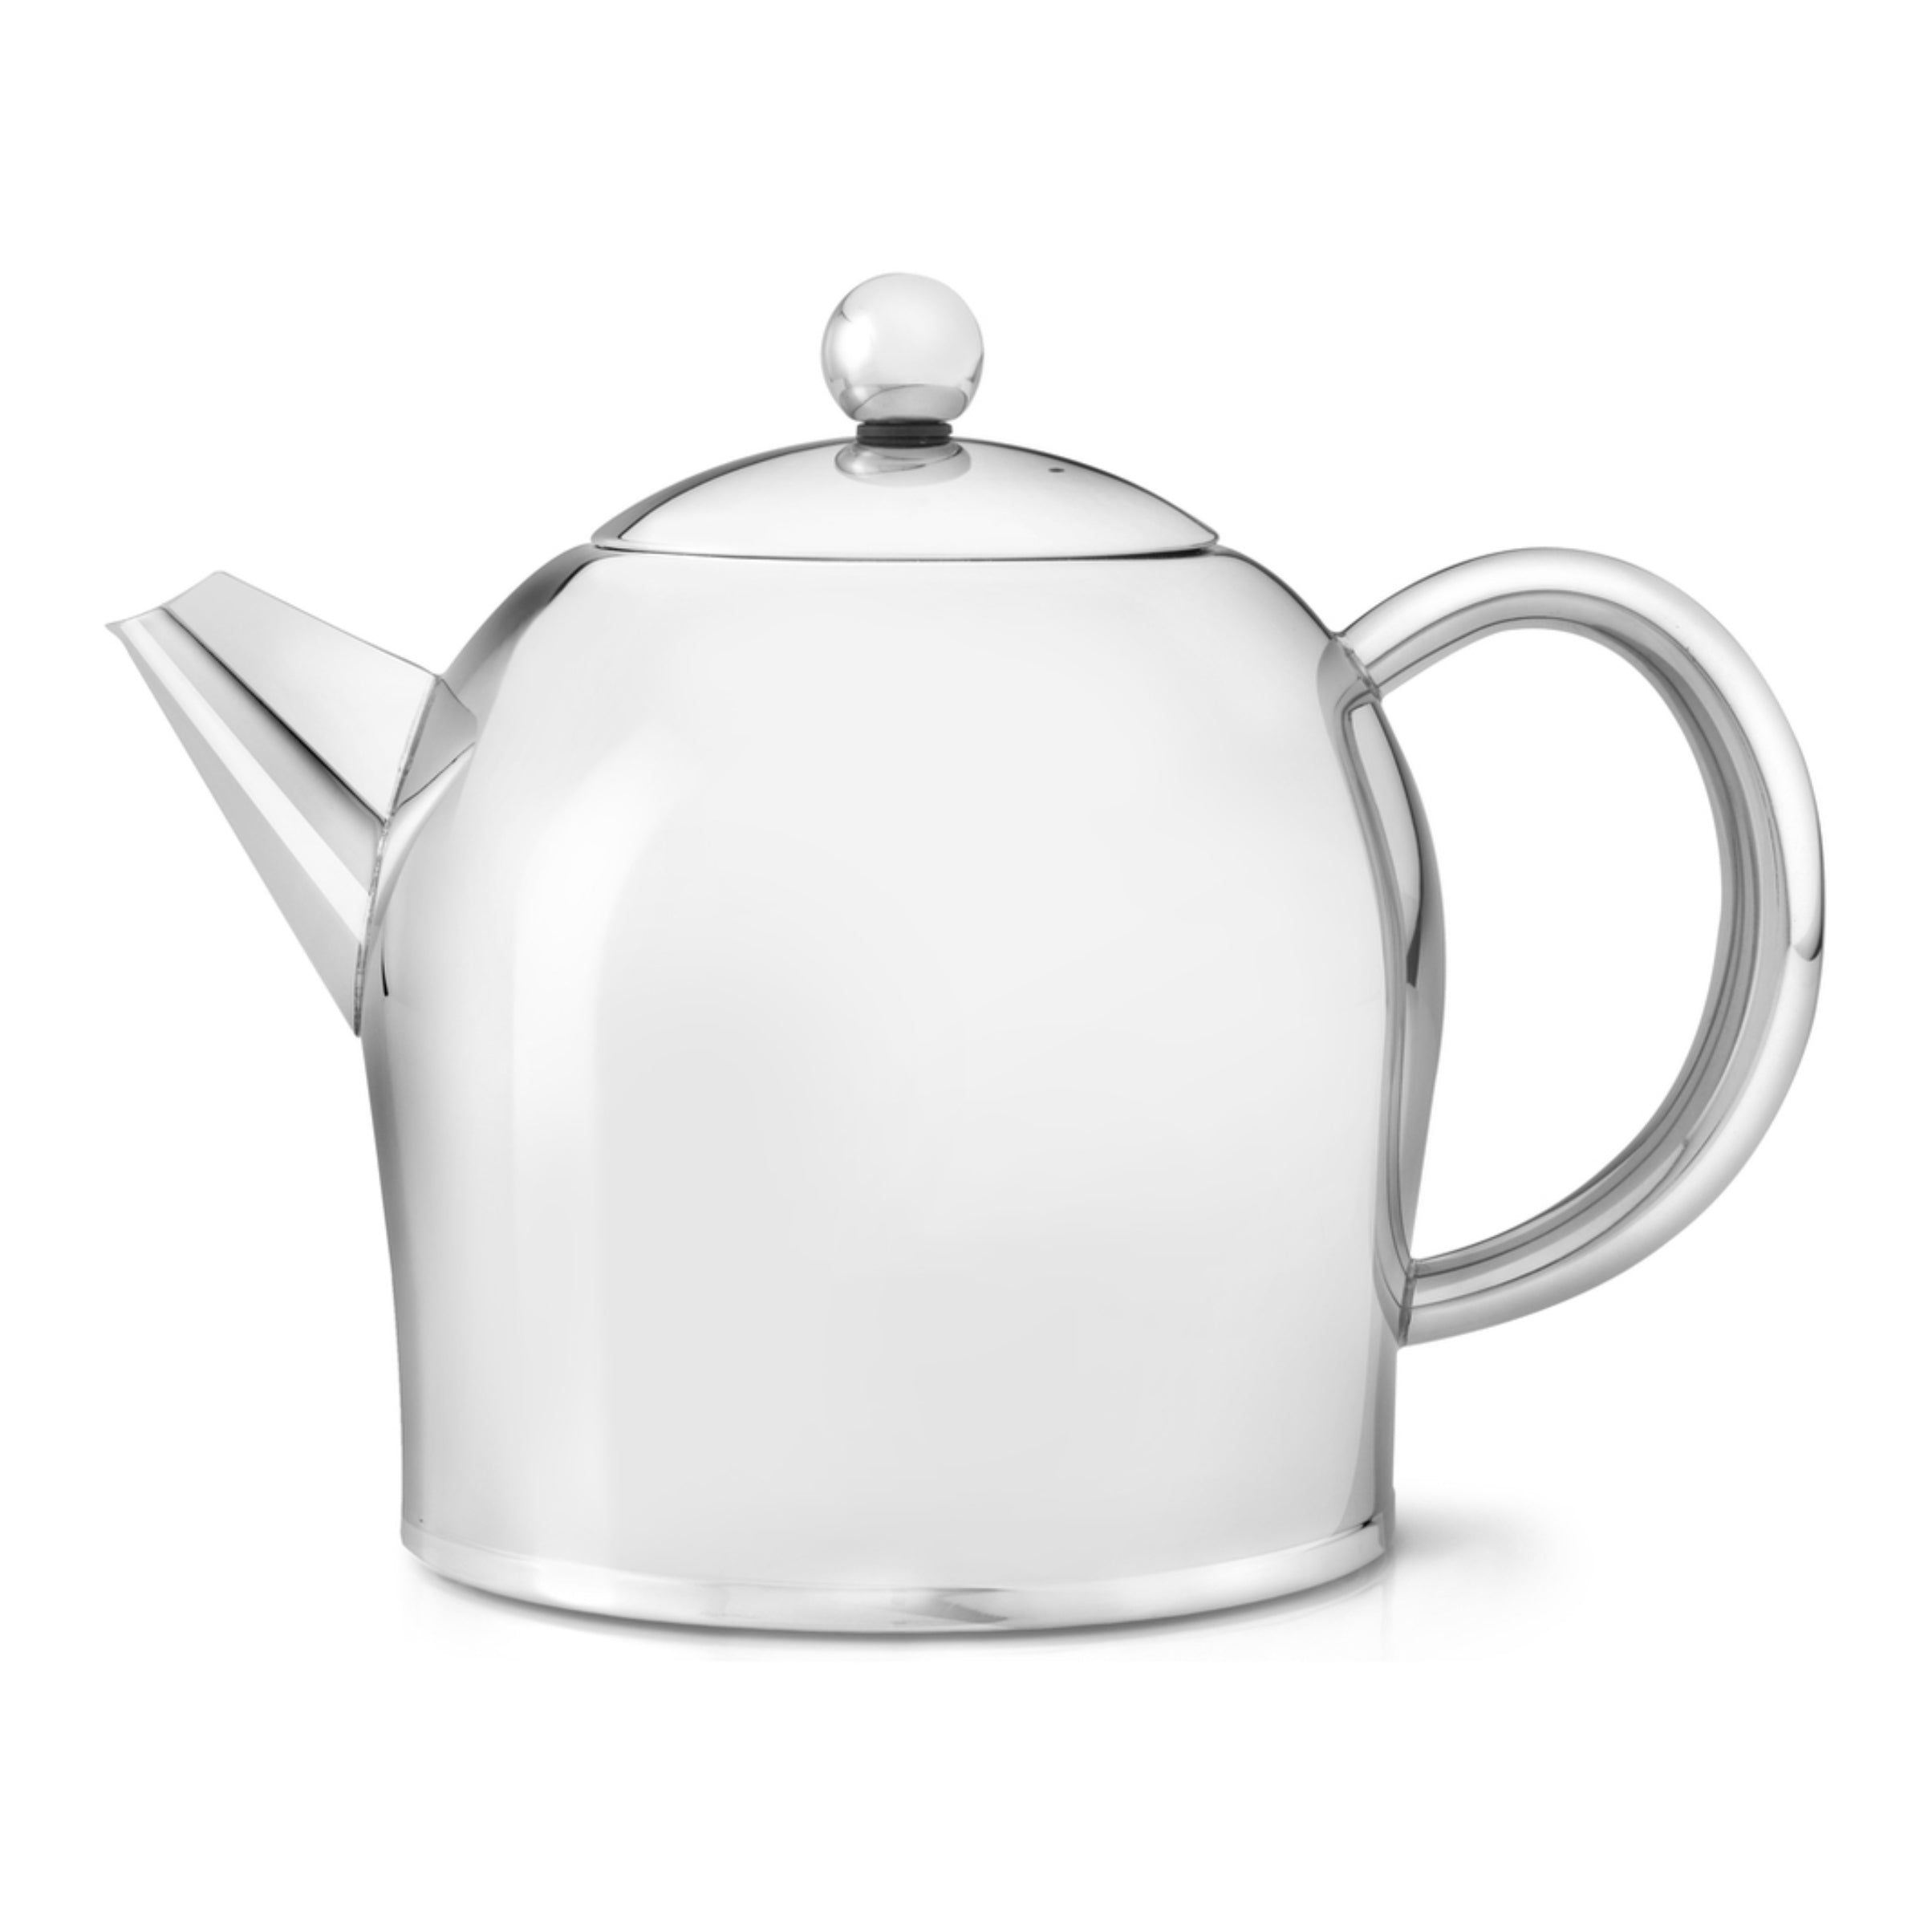 Bredemeijer Santhee Stainless Steel Glossy Teapot – 17 oz